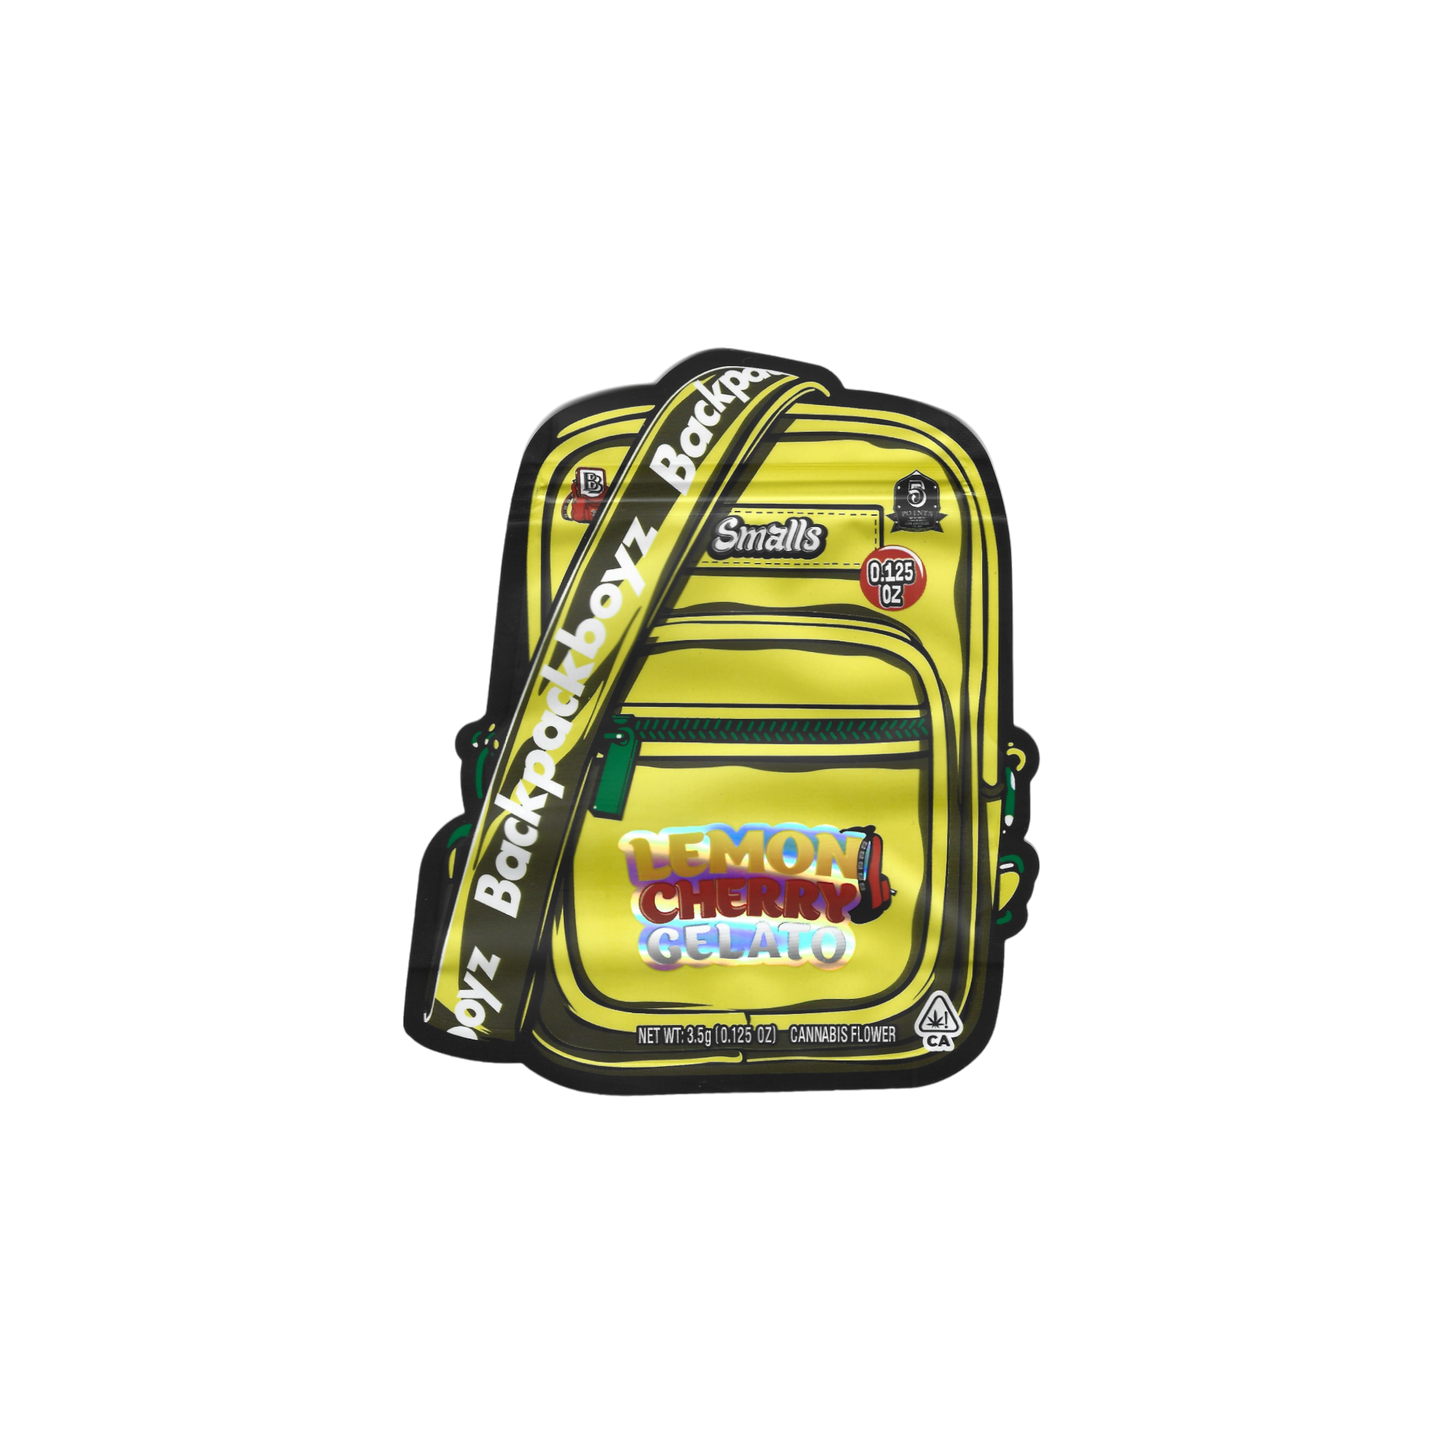 10x Backpackboyz Lemon cherry gelato smalls shaped Mylar Bag 3,5g - Leer